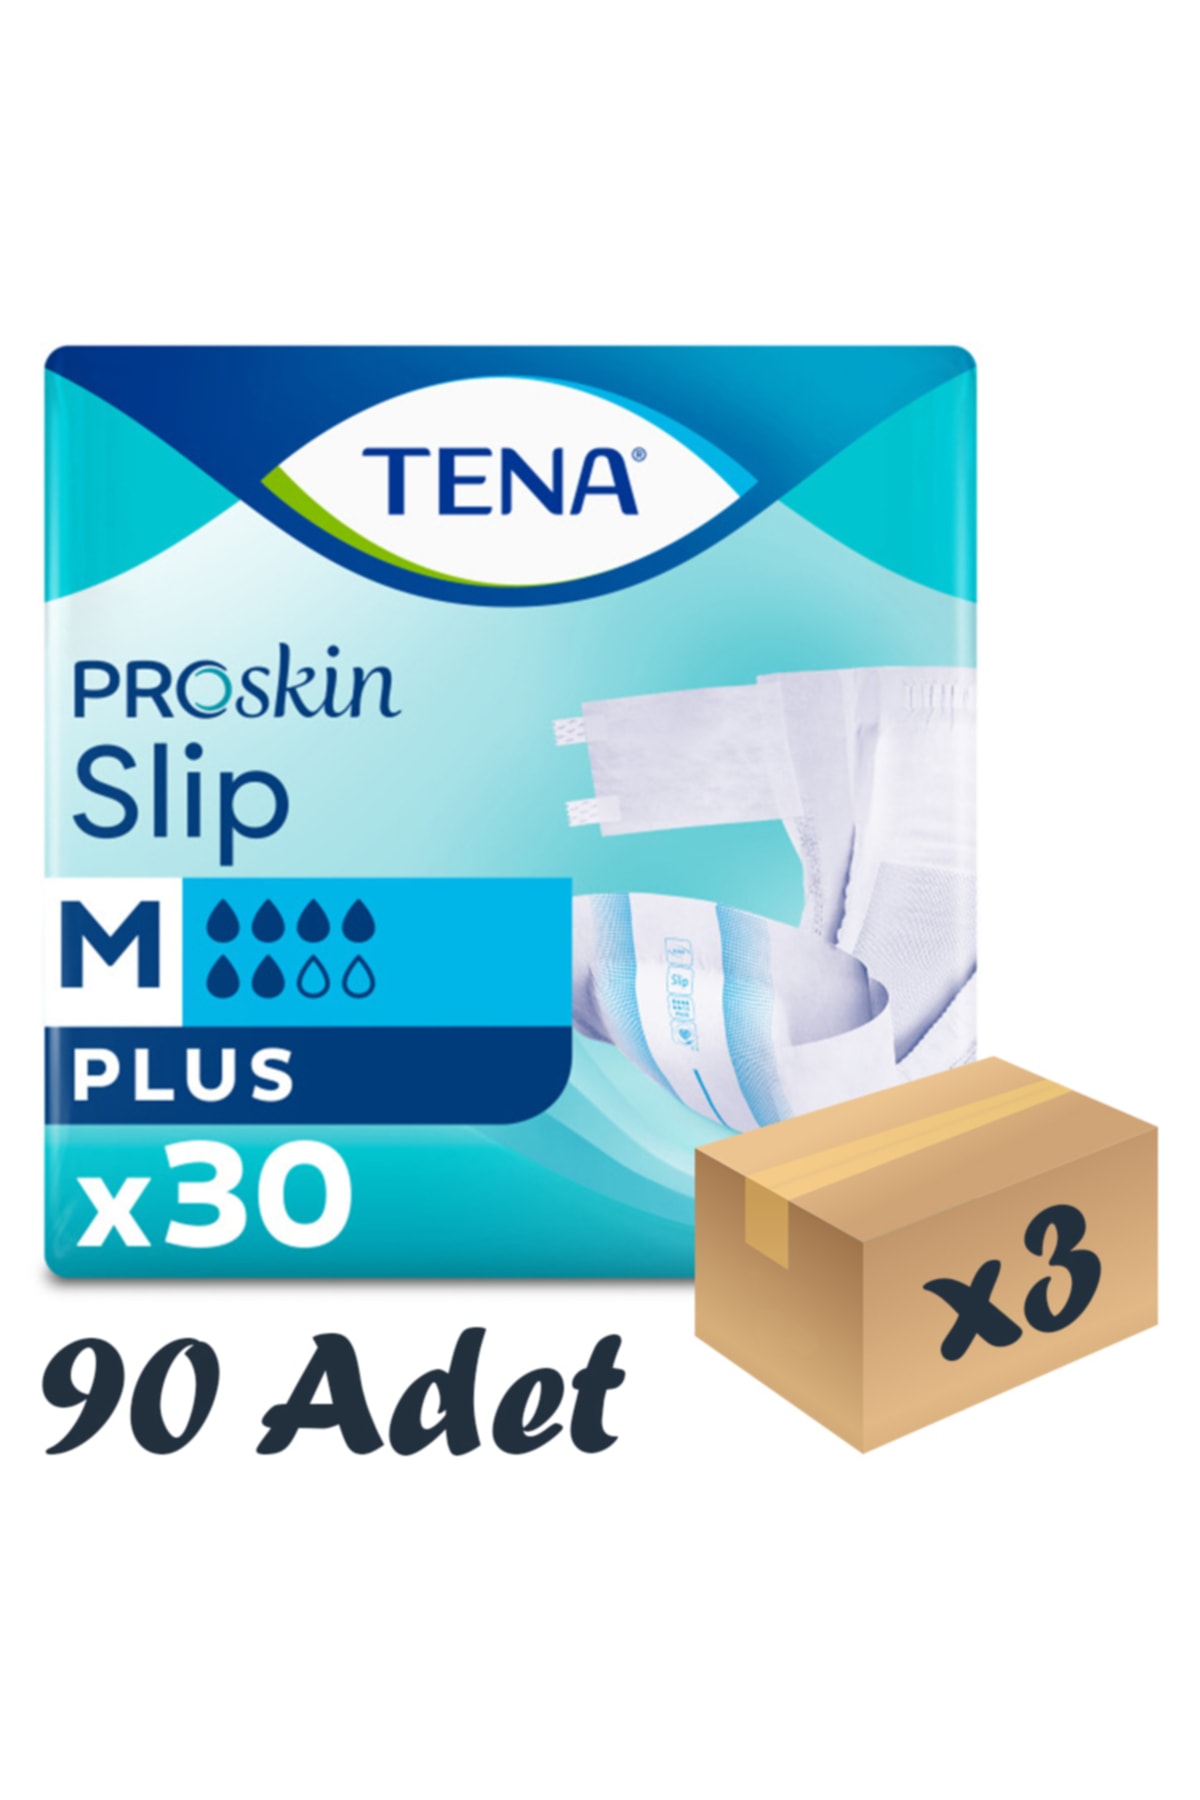 TENA Proskin Slip Plus Belbantlı Hasta Bezi, Orta Boy (m), 6 Damla, 30'lu 3 Paket 90 Adet